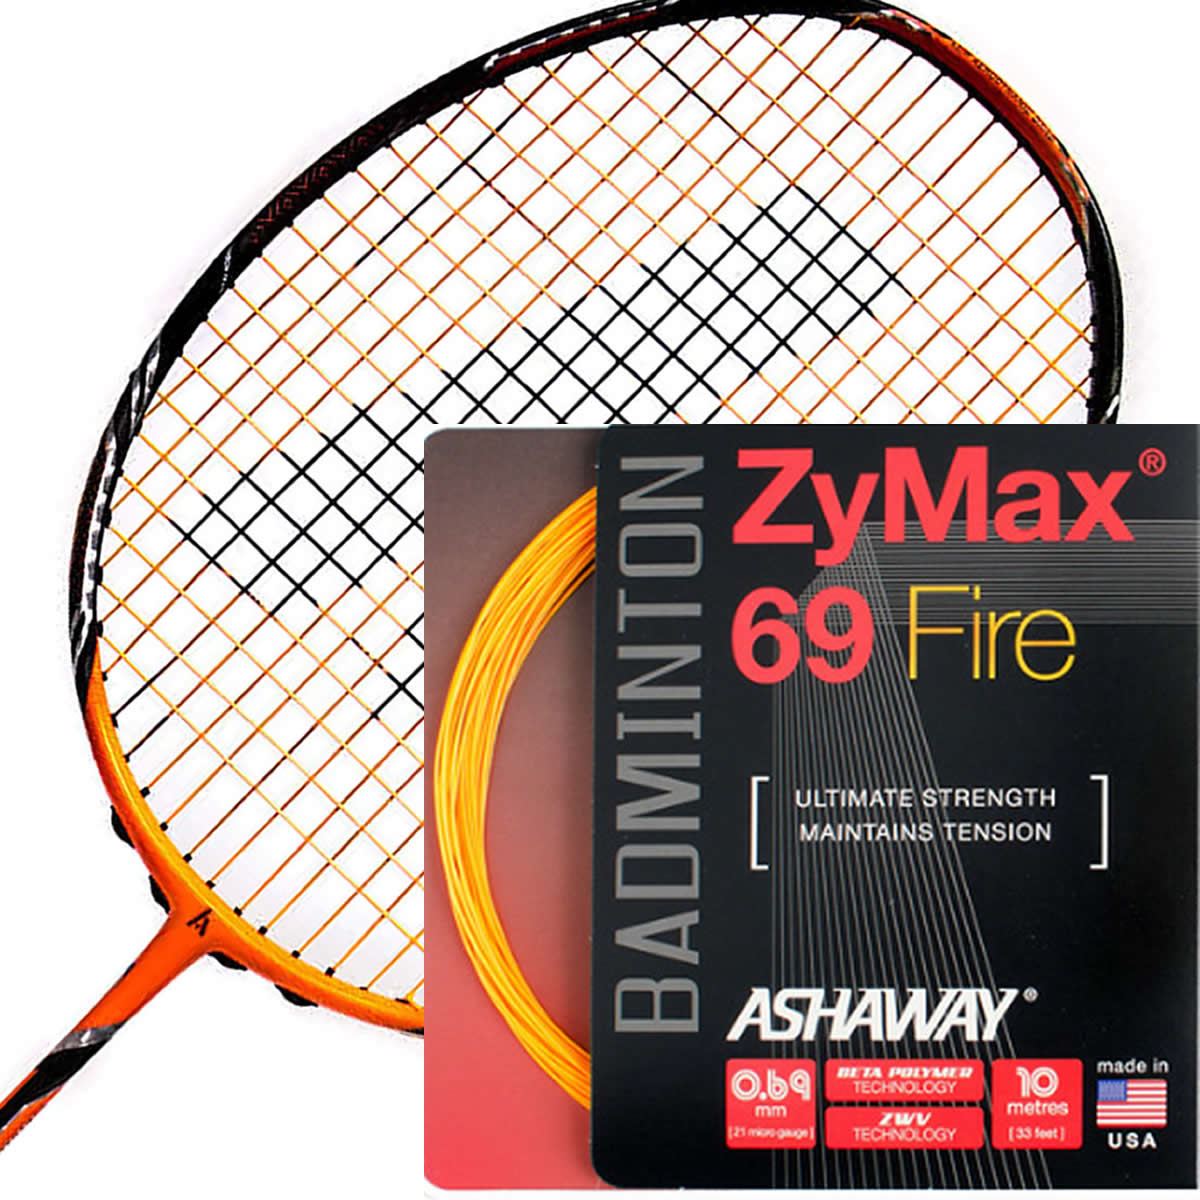 Ashaway Zymax 69 Fire Badminton String Orange - 0.69MM - 10m Packet